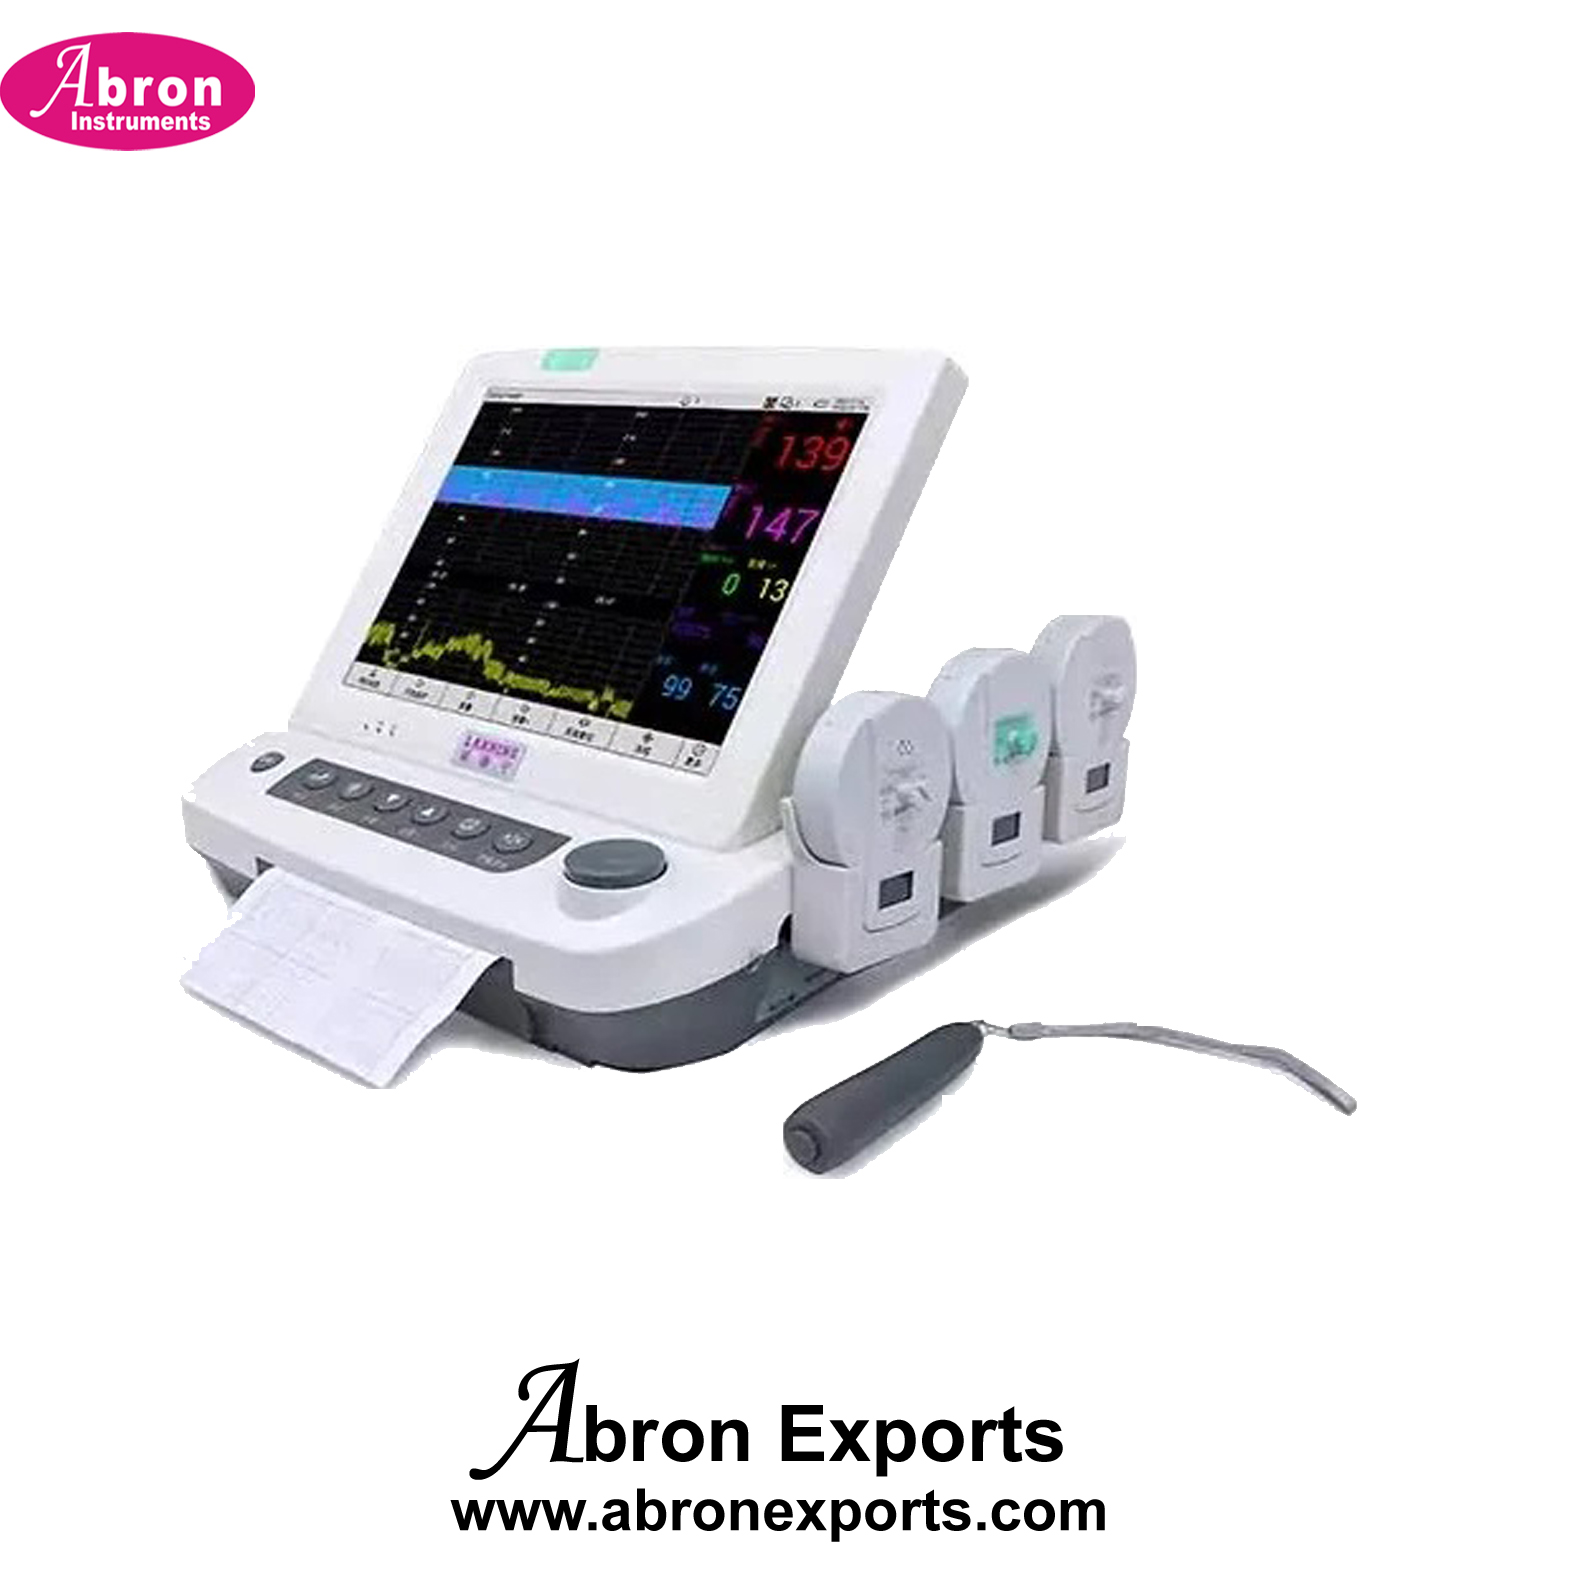 CTG Machine wireless fetal Monitor High End Anesthesia workstation Hospital Cardiotocography Printer Abron ABM-2280CT 